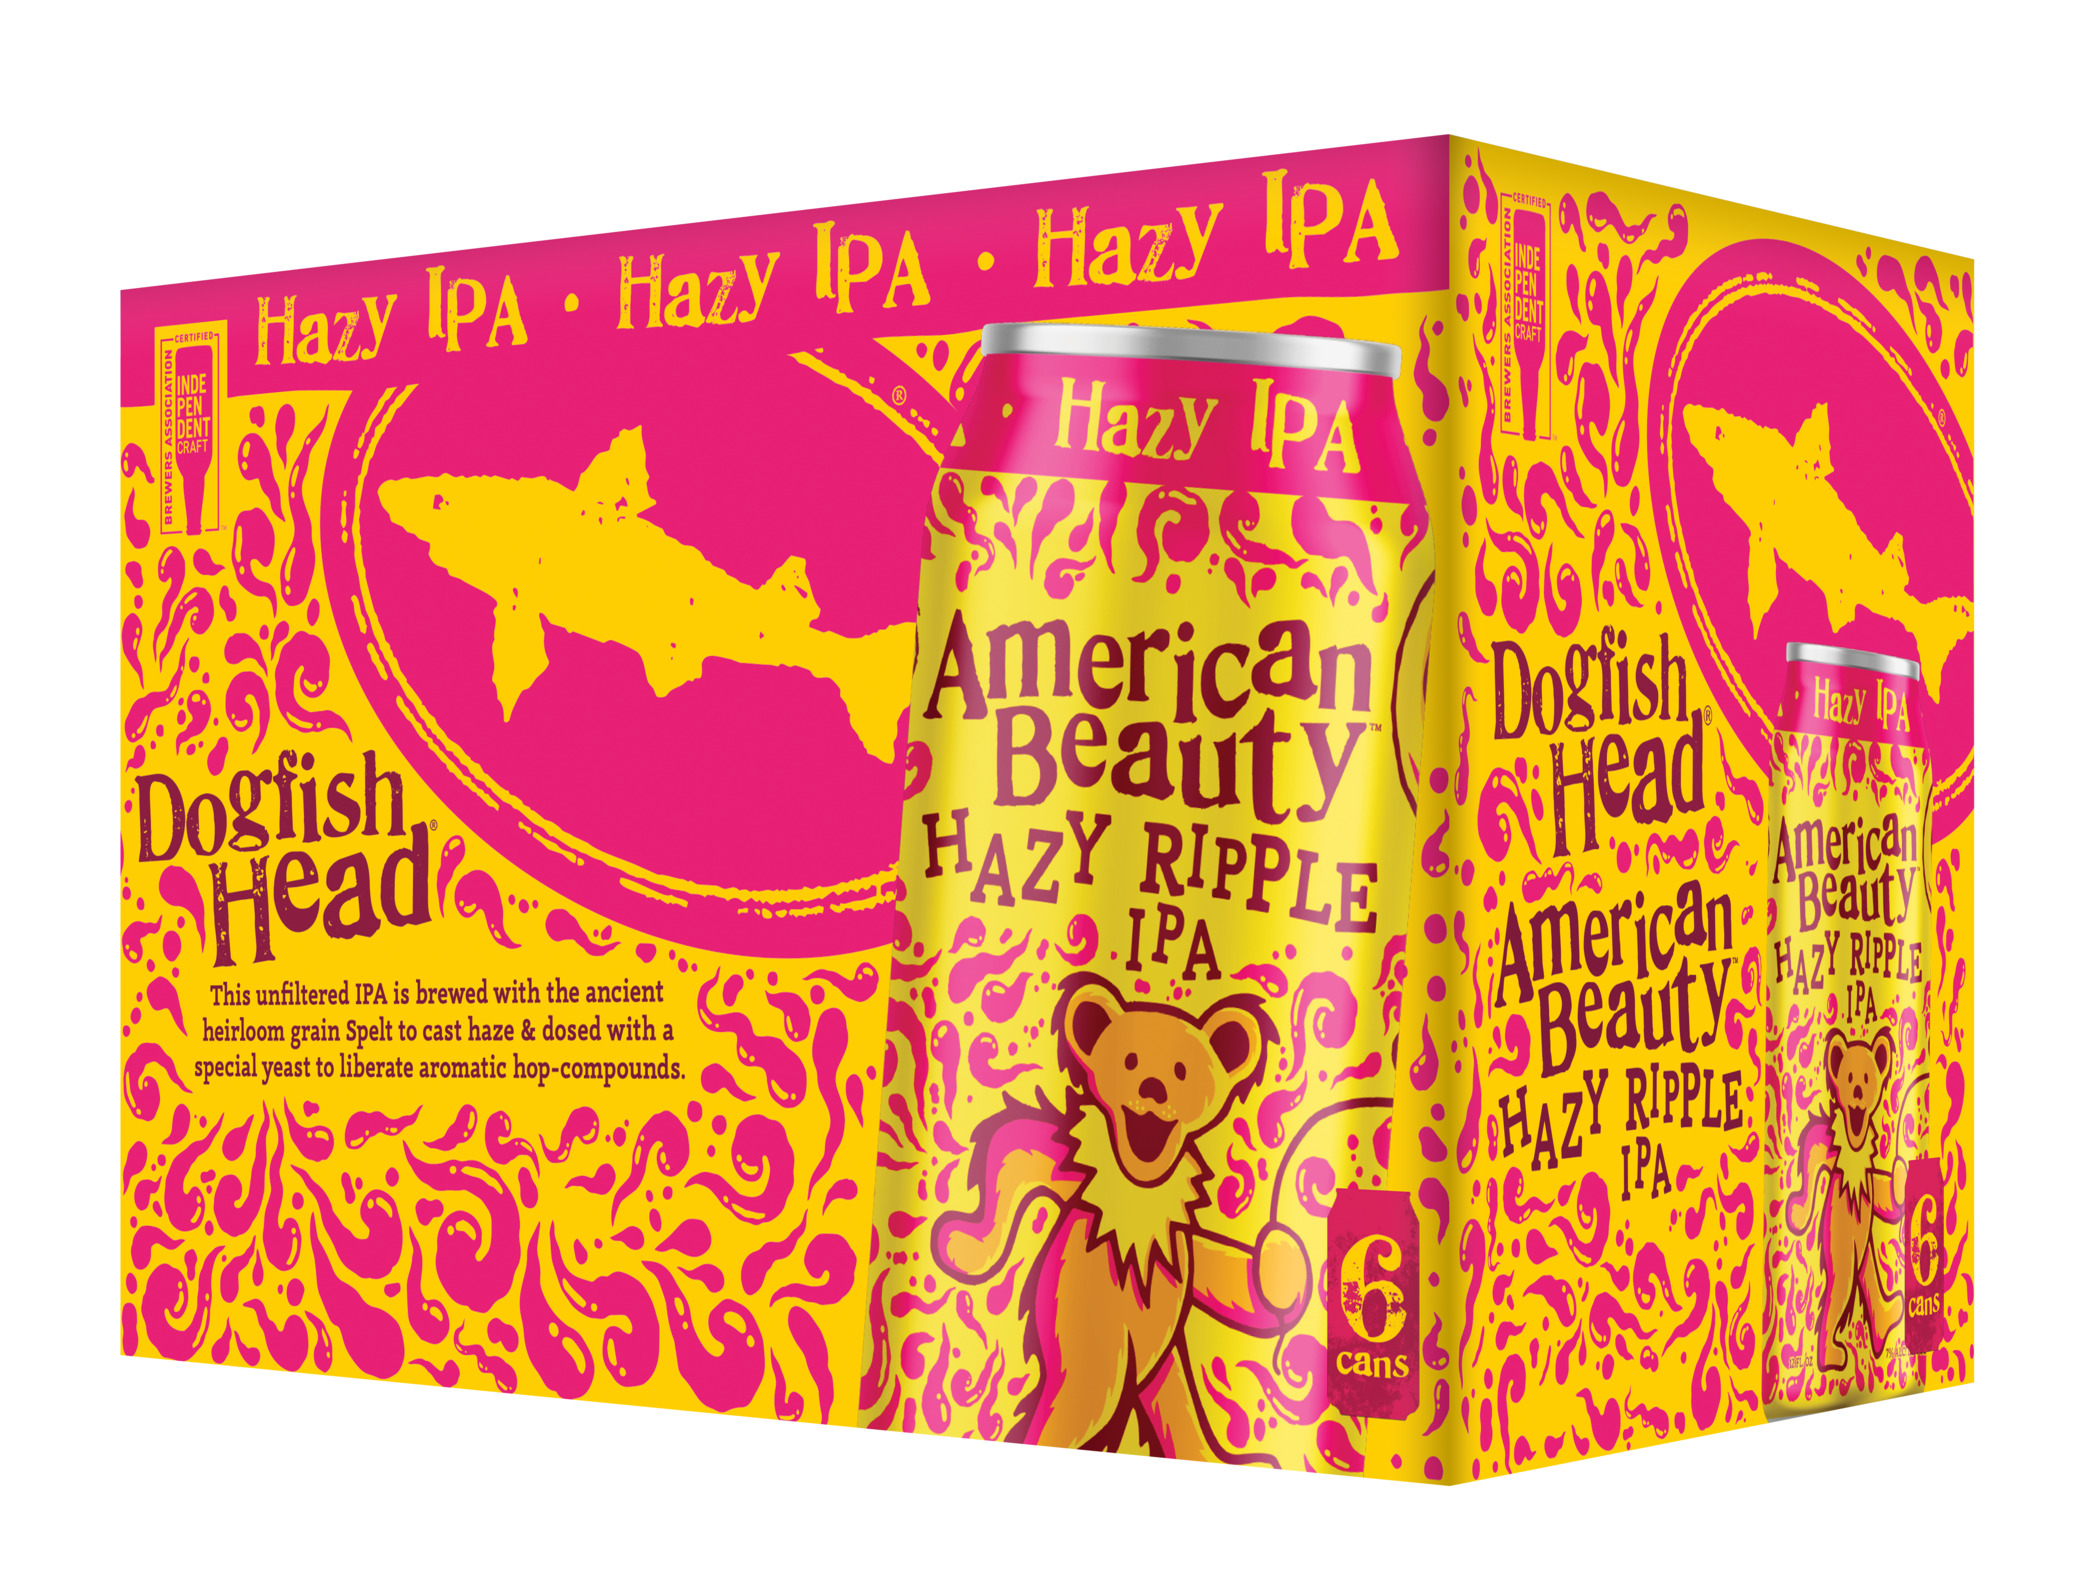 images/beer/IPA BEER/Dogfish Head American-Beauty-Hazy-Ripple-IPA.jpg